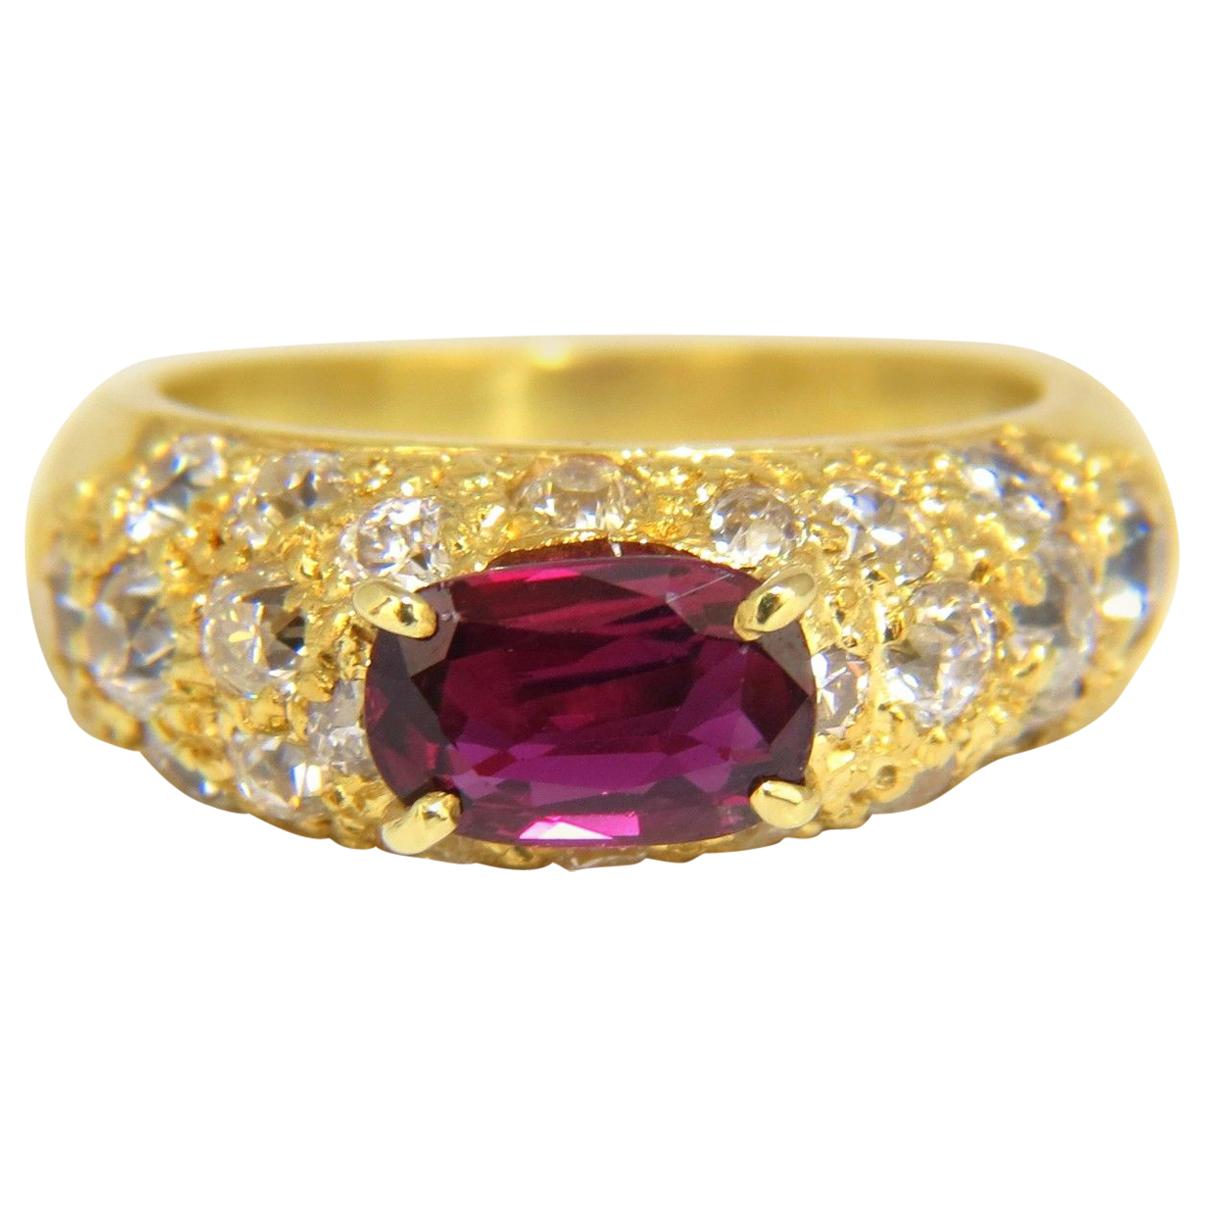 2.64 Carat Natural Oval Vivid Purple Red Ruby Diamonds Ring 18 Karat